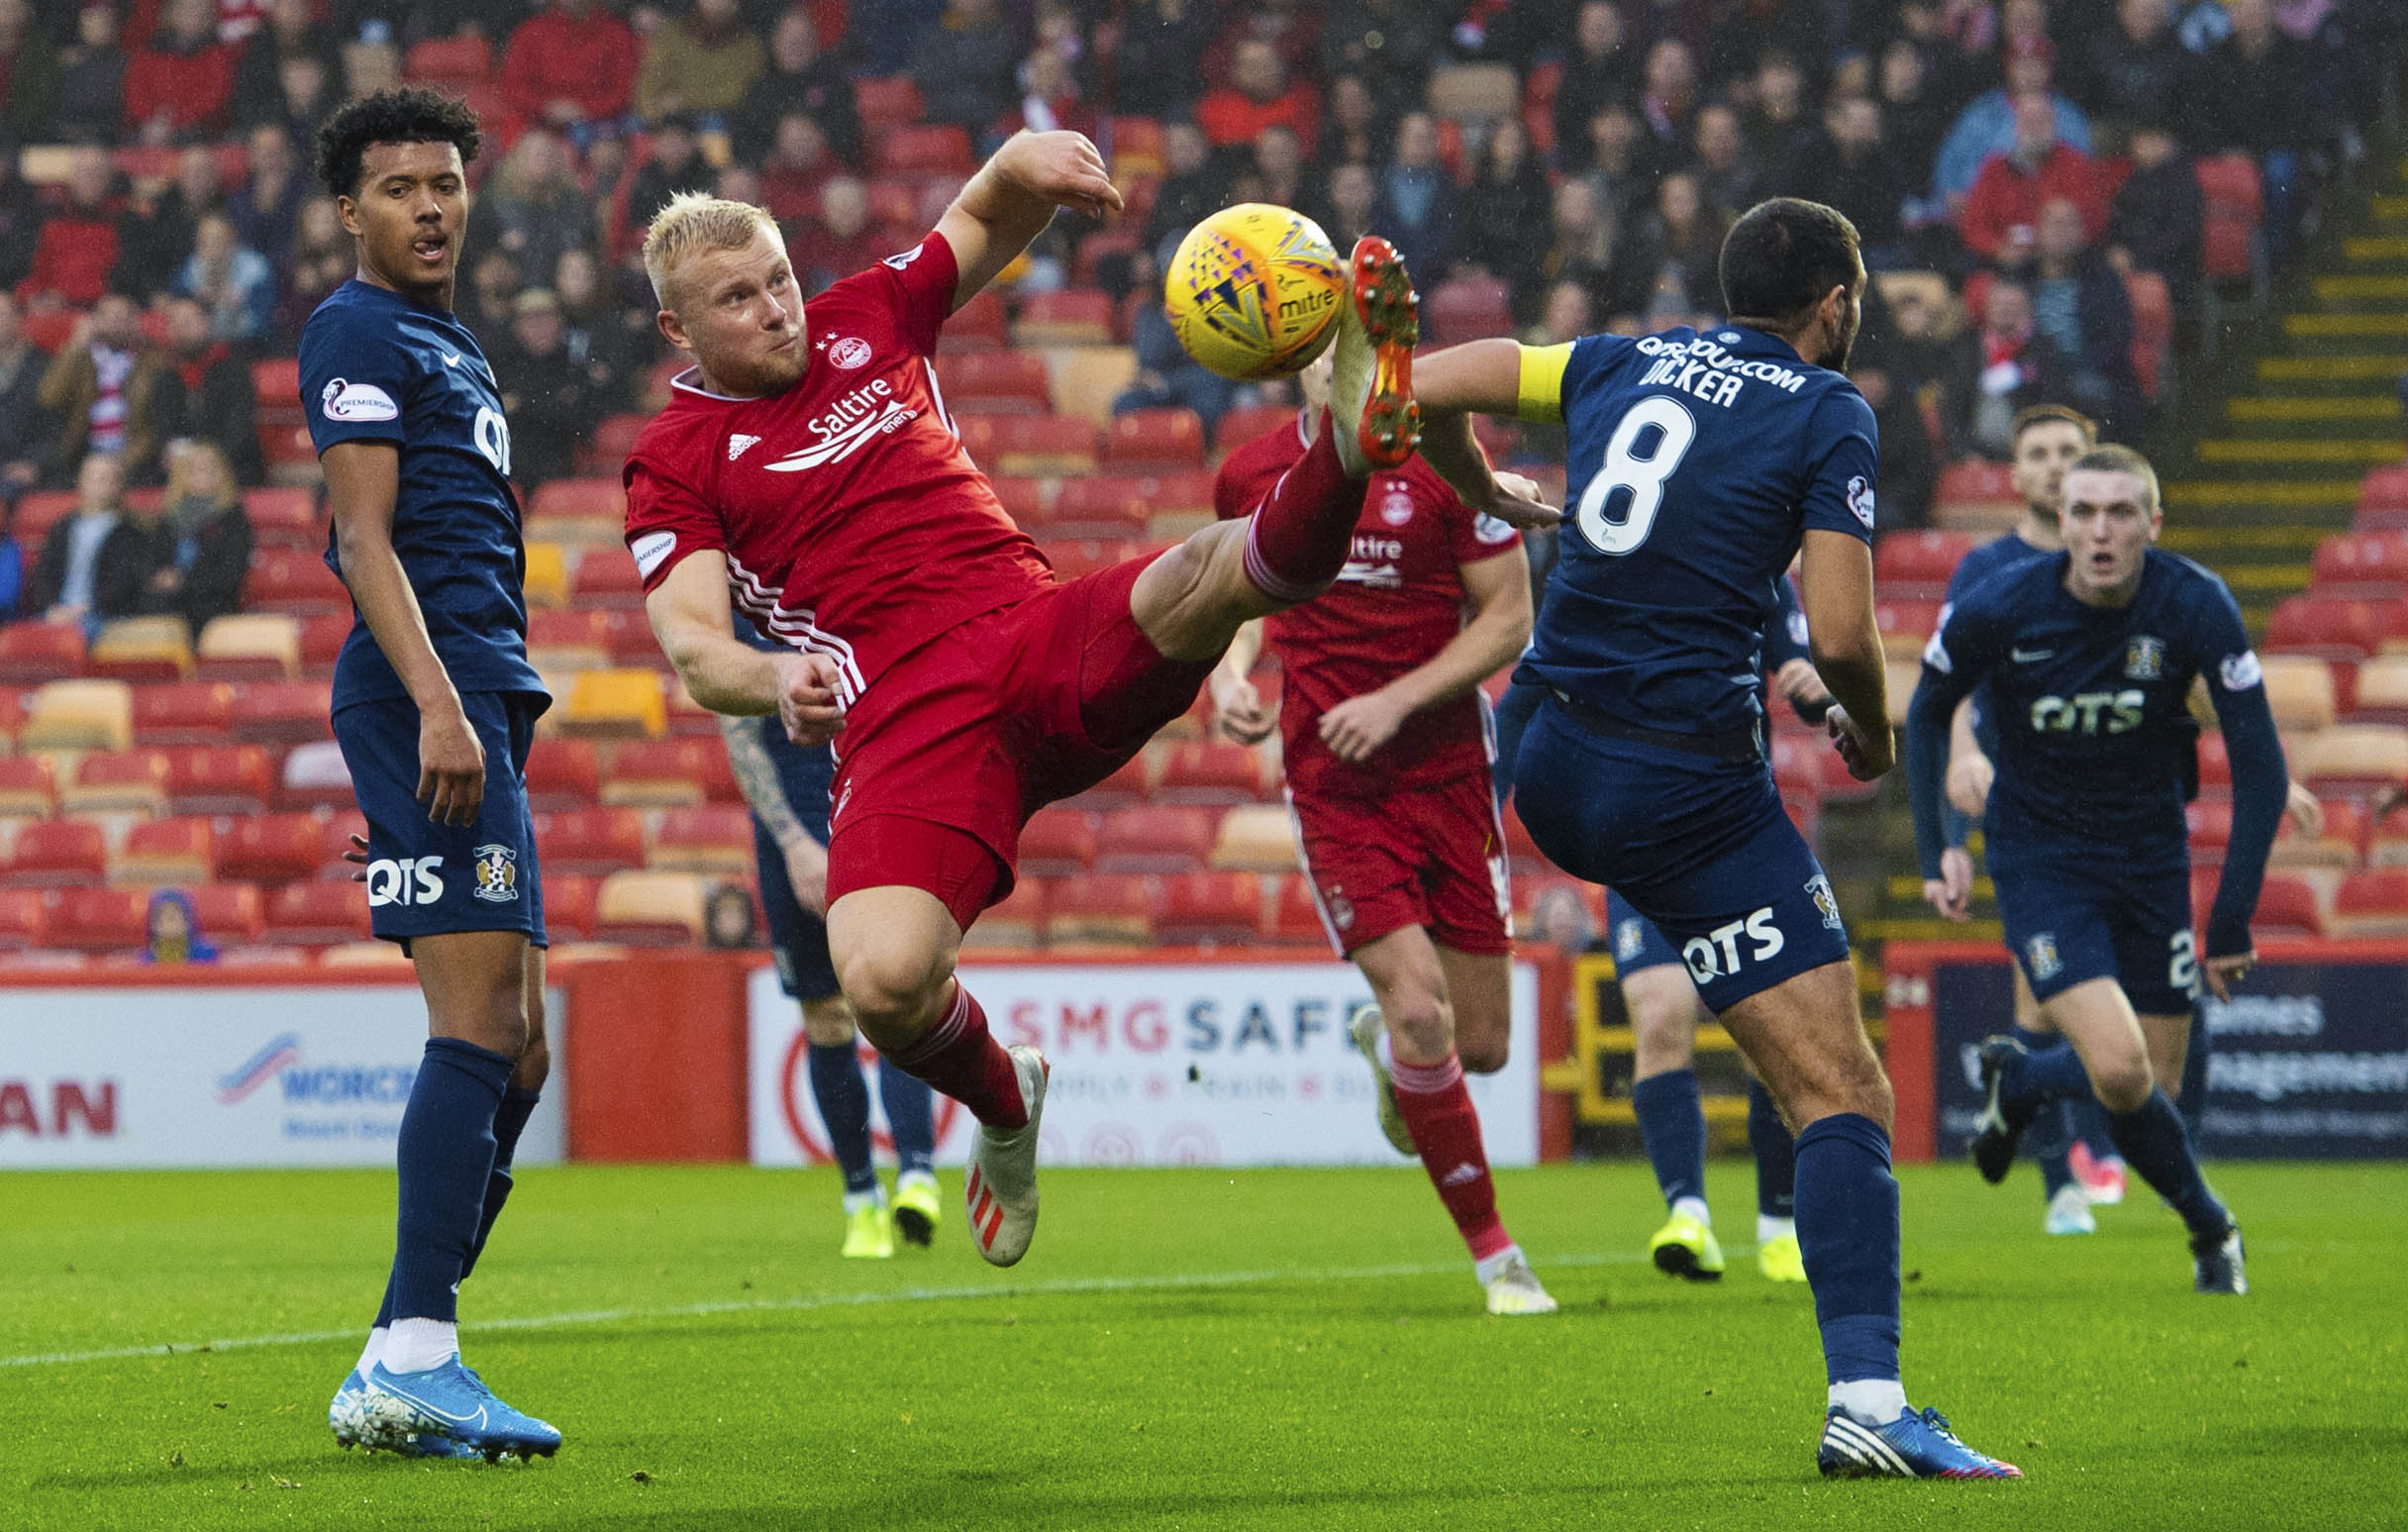 Aberdeen's Curtis Main attempts an overhead kick during the Ladbrokes Premiership match between Aberdeen and Kilmarnock.